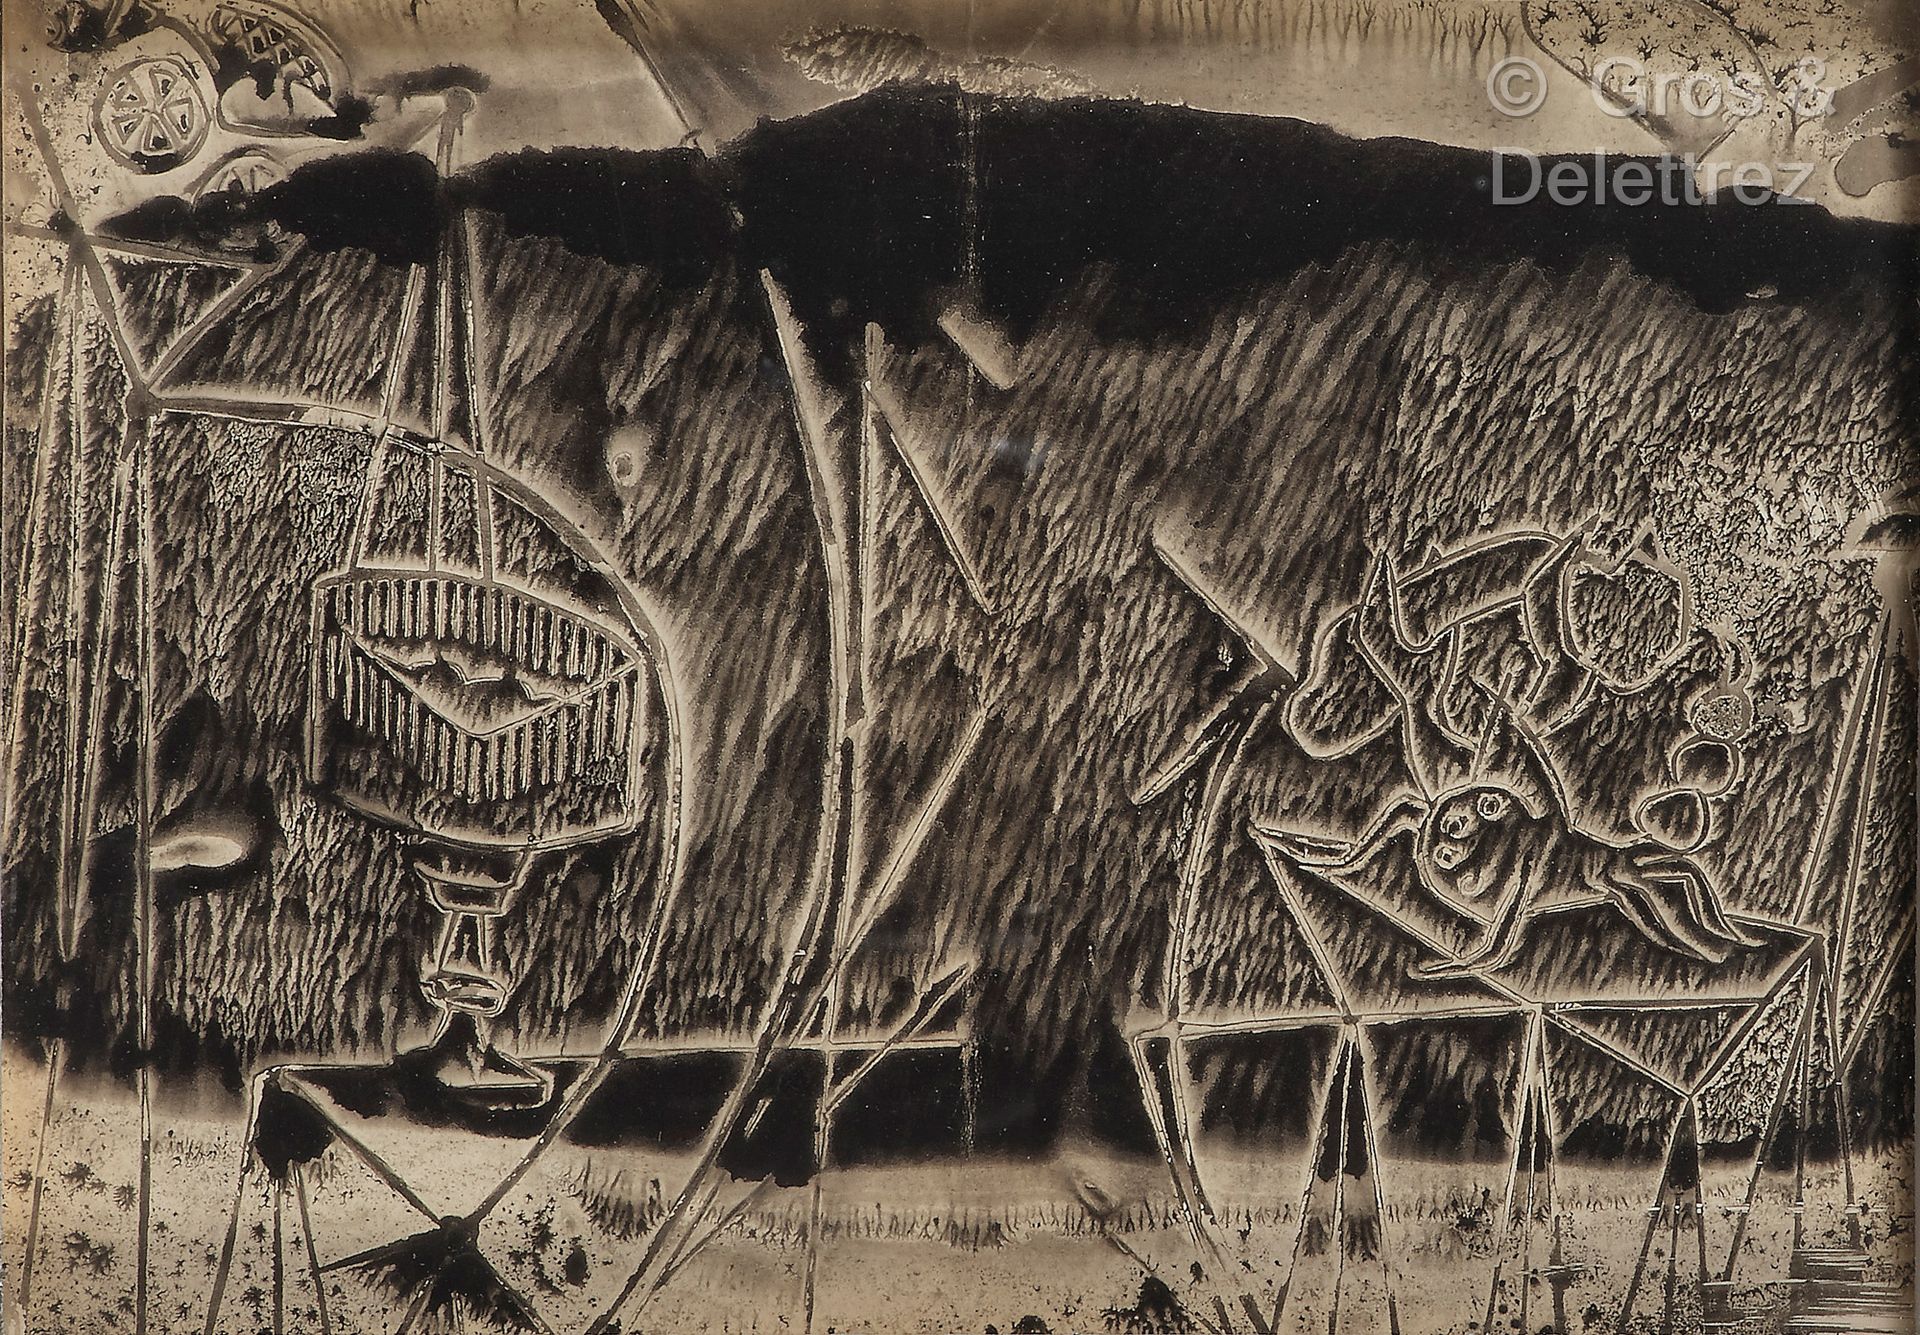 Oscar DOMINGUEZ [FRANCE-ESPAGNE] (1906-1957) 酒杯和蝎子
纸上水墨和水彩。
背面印有 "Etude de Me Rh&hellip;